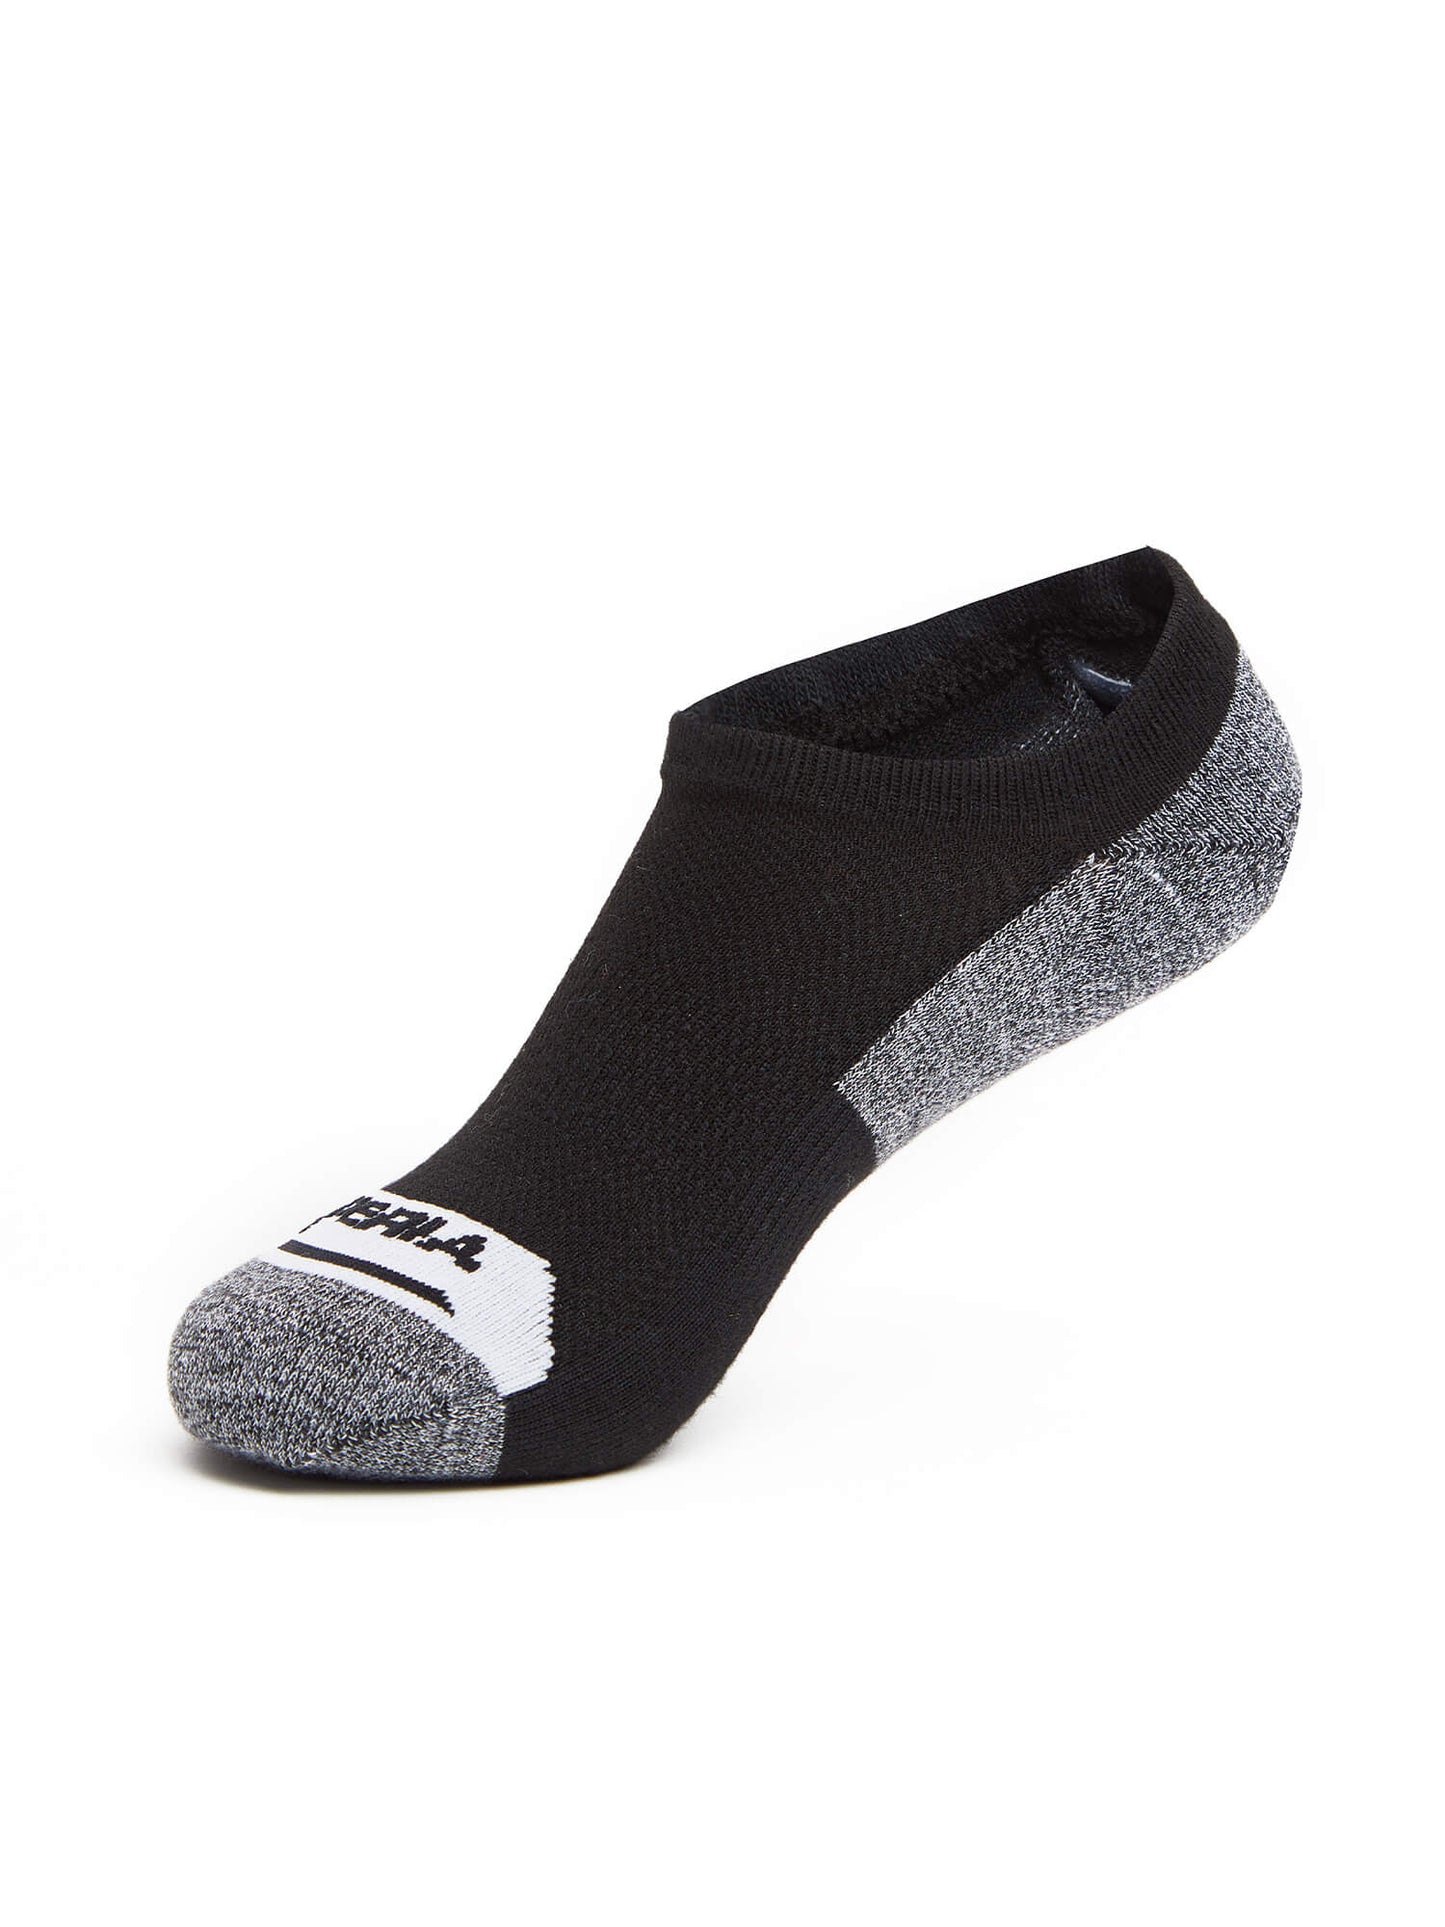 Side of Thorlos Experia Repreve No Show Liner Socks in Black